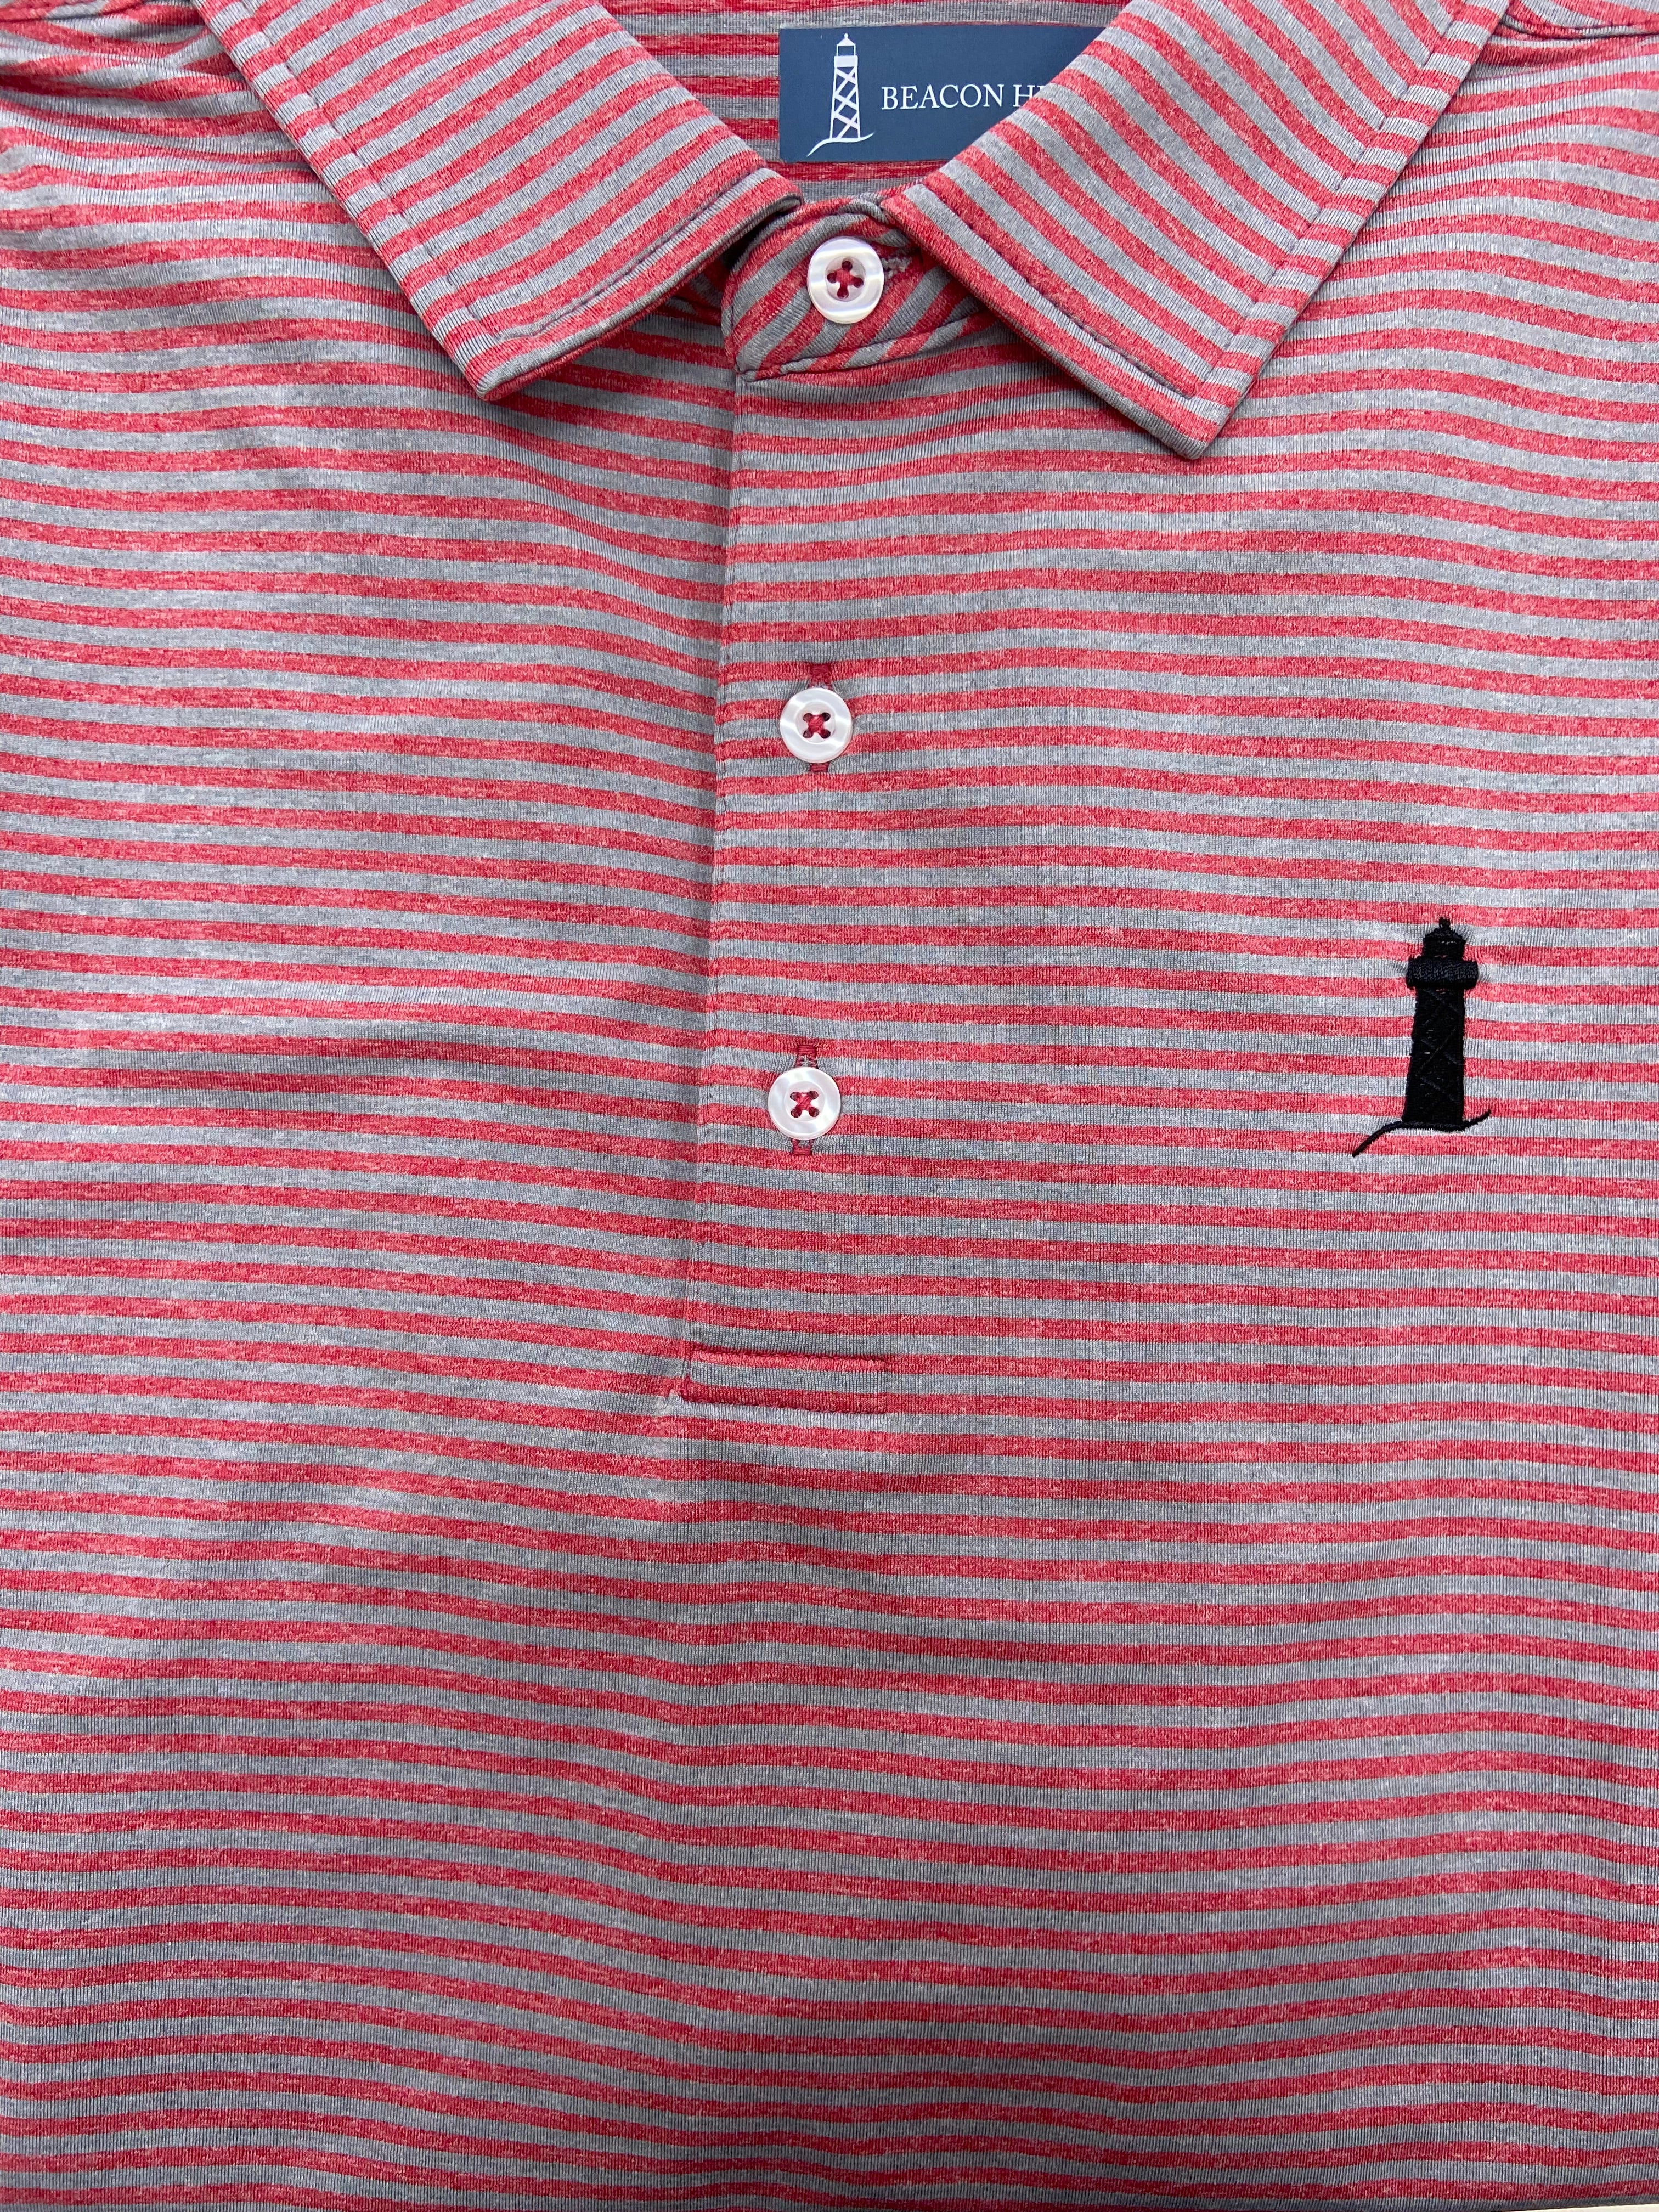 Beacon Hill Red/Silver Stripe Short Sleeve Polo